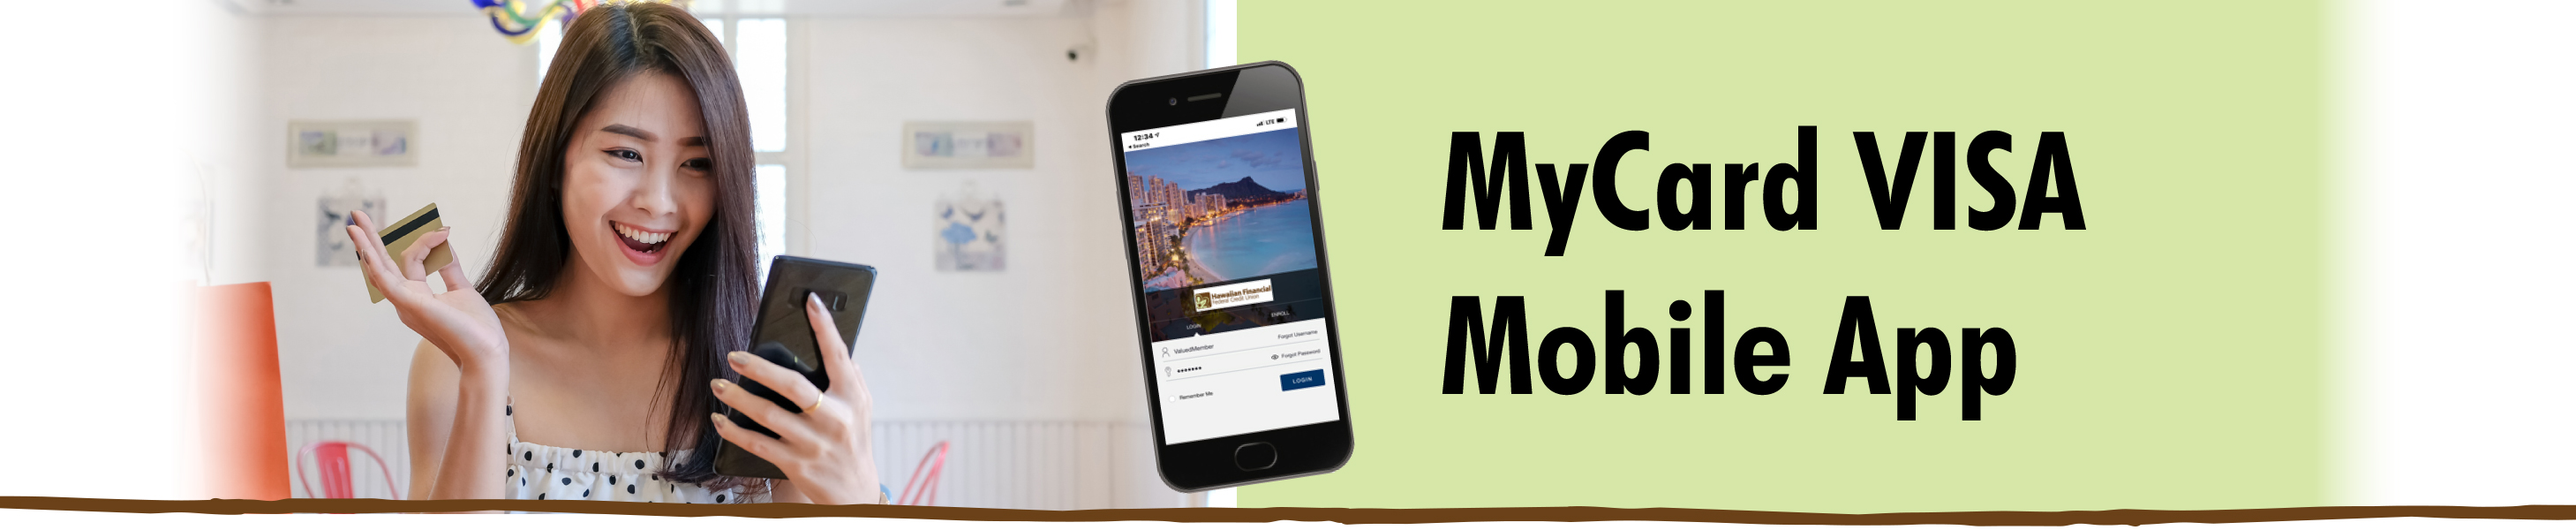 MyCard VISA Mobile App